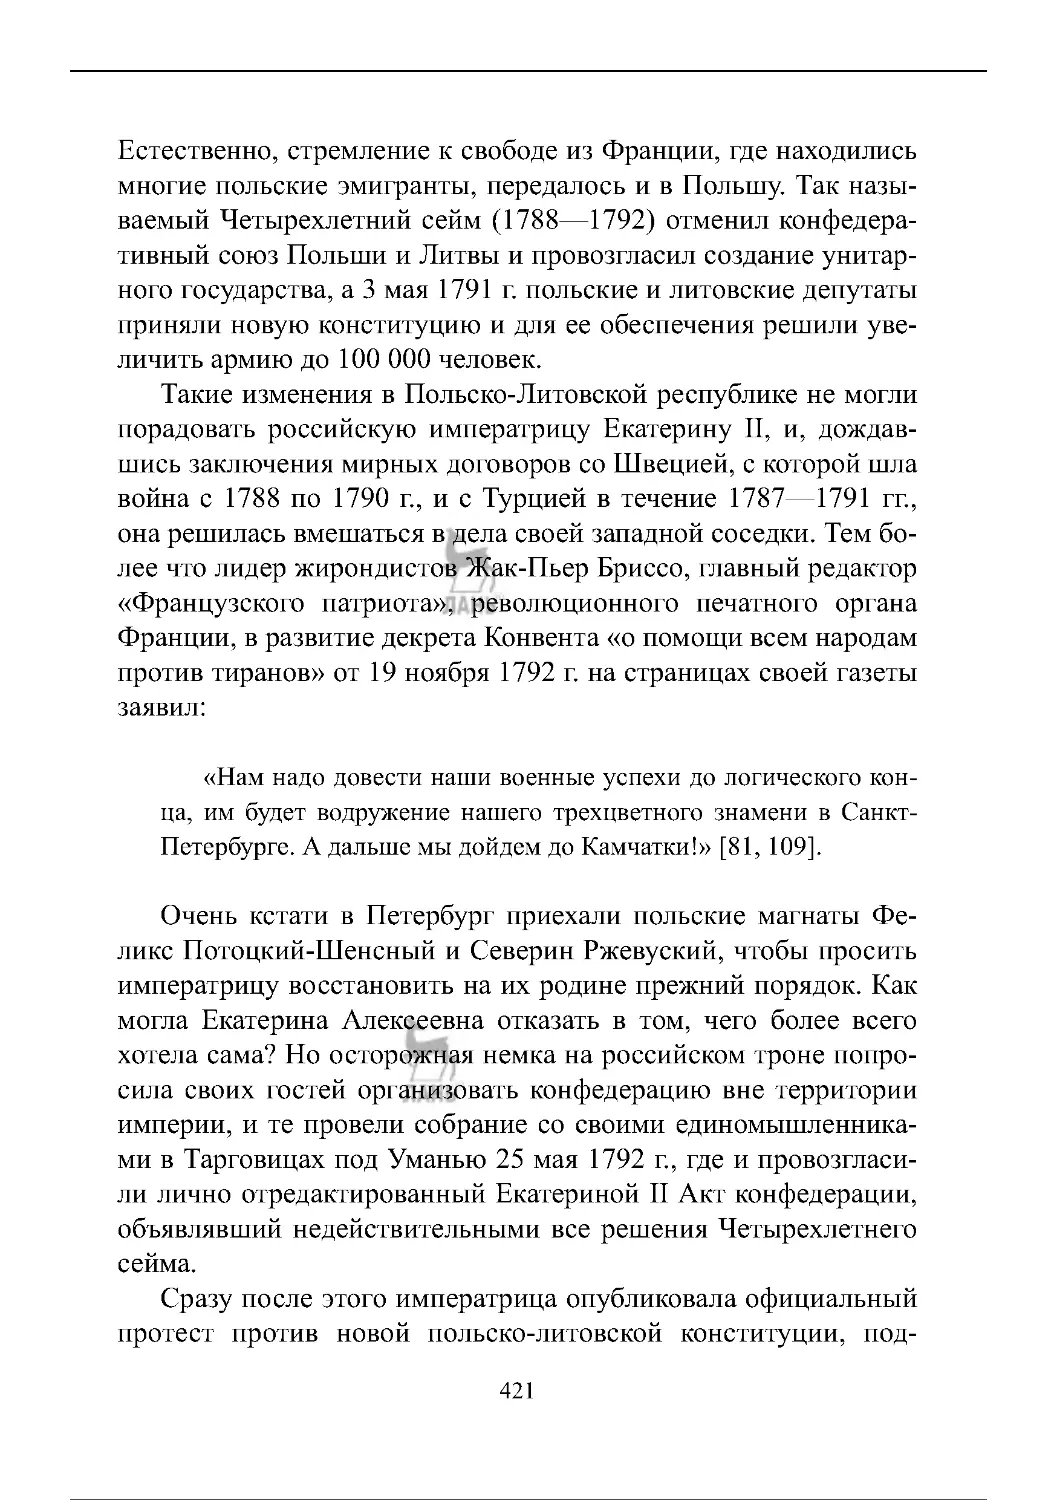 istoria_zavoevania_i_kolonizacii_sibiri_421-480